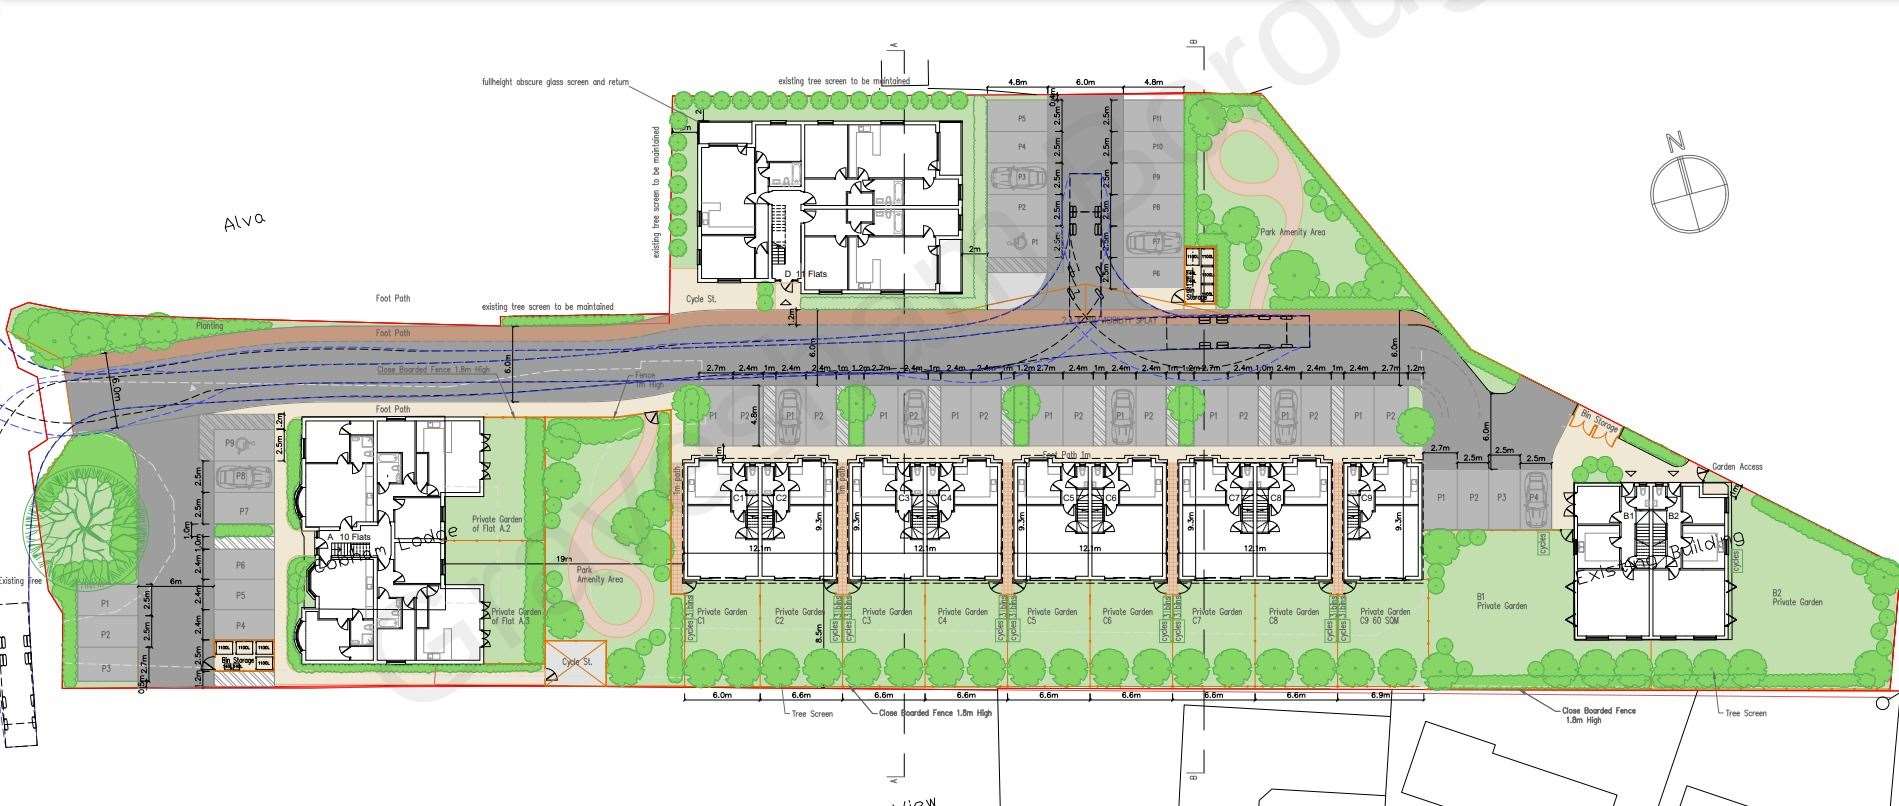 How the development could look. Picture: Gravesham Borough Council / Breley Design